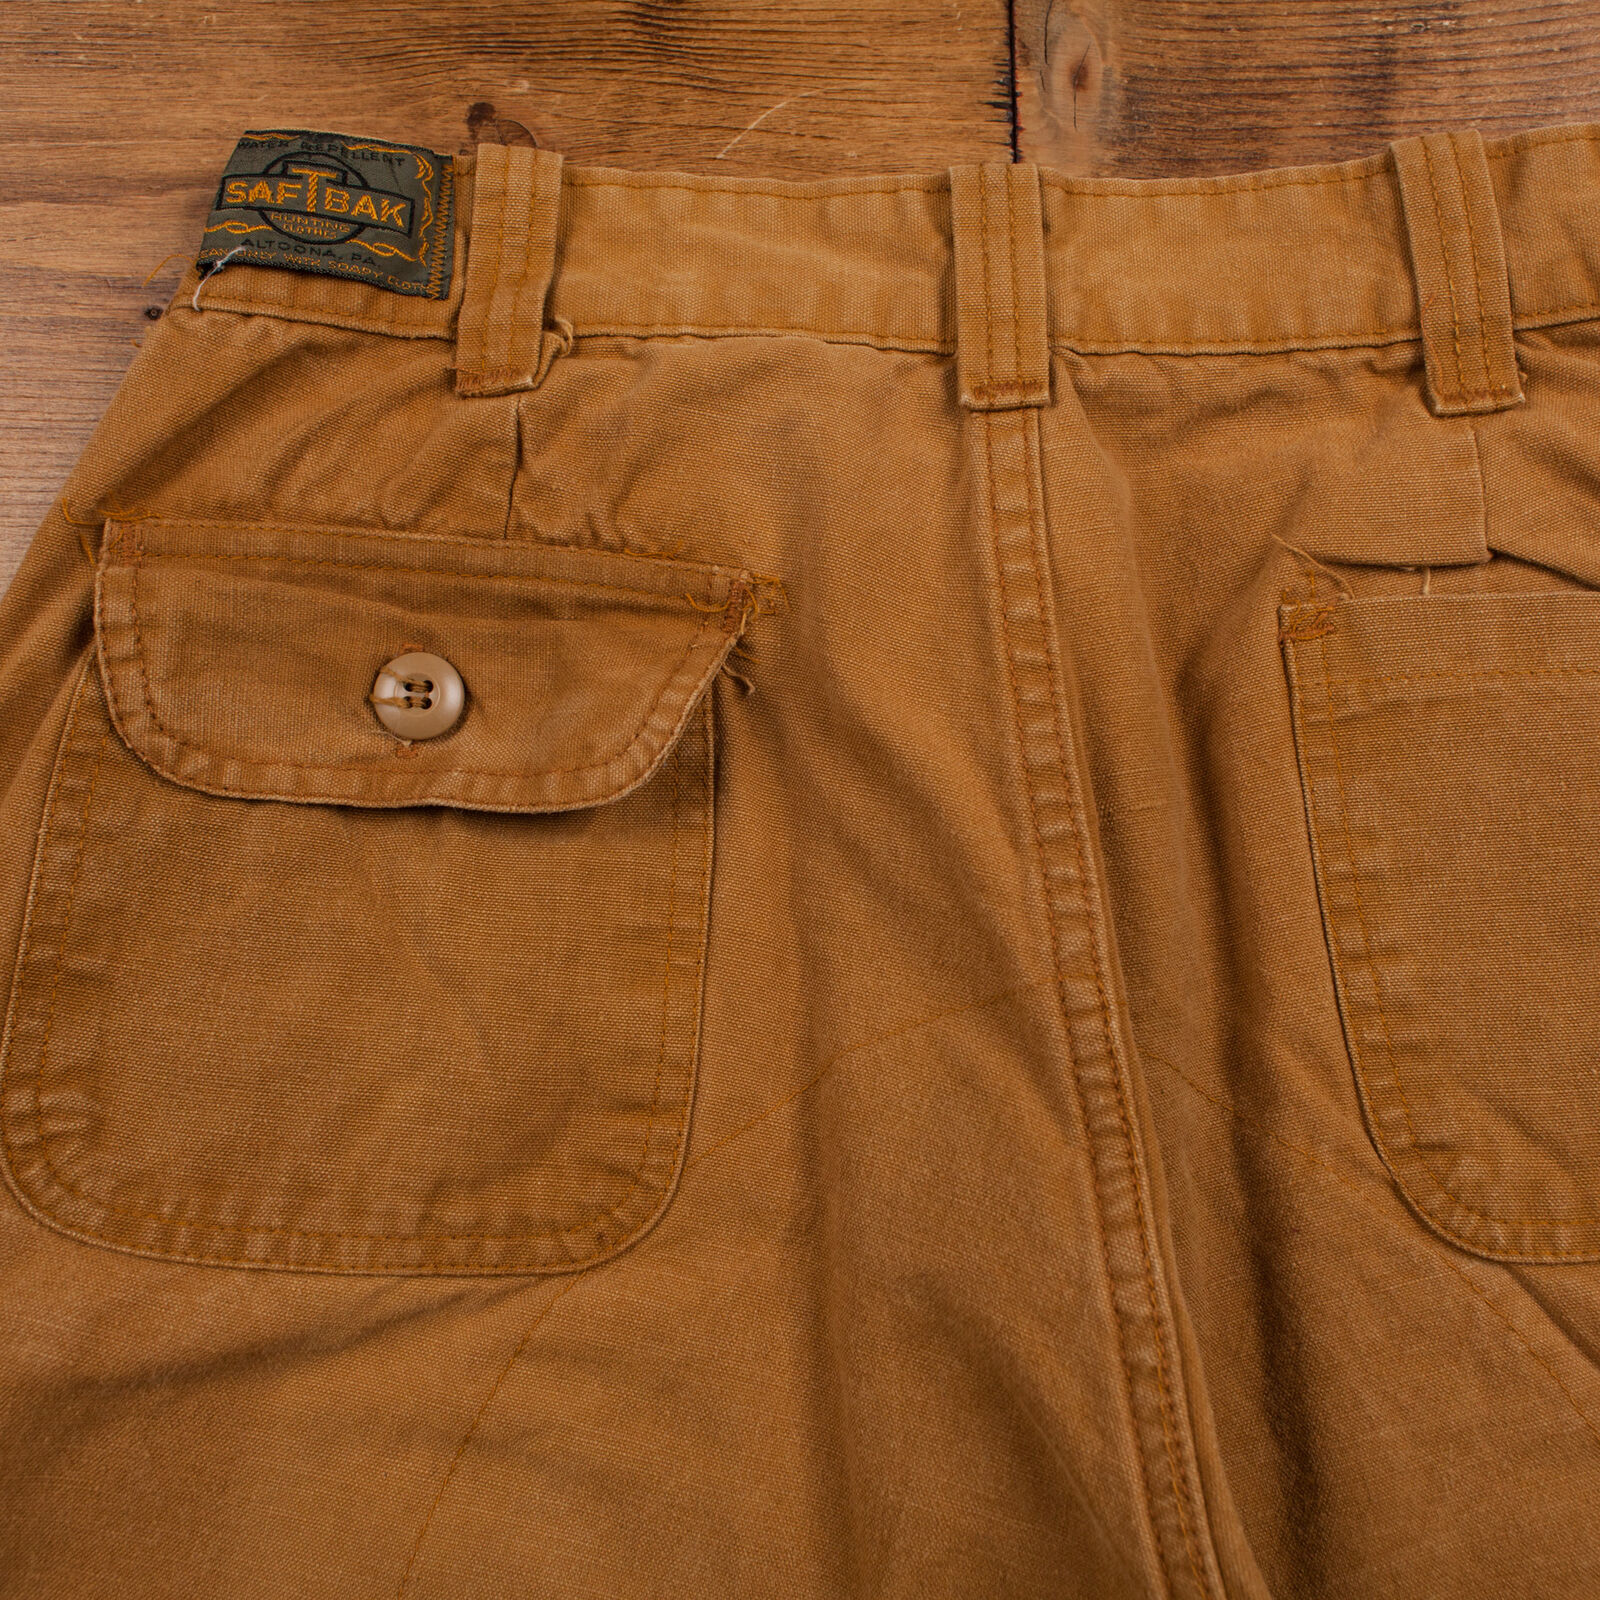 Vintage SafTbak Workwear Pants Trousers 30x26 70s… - image 2